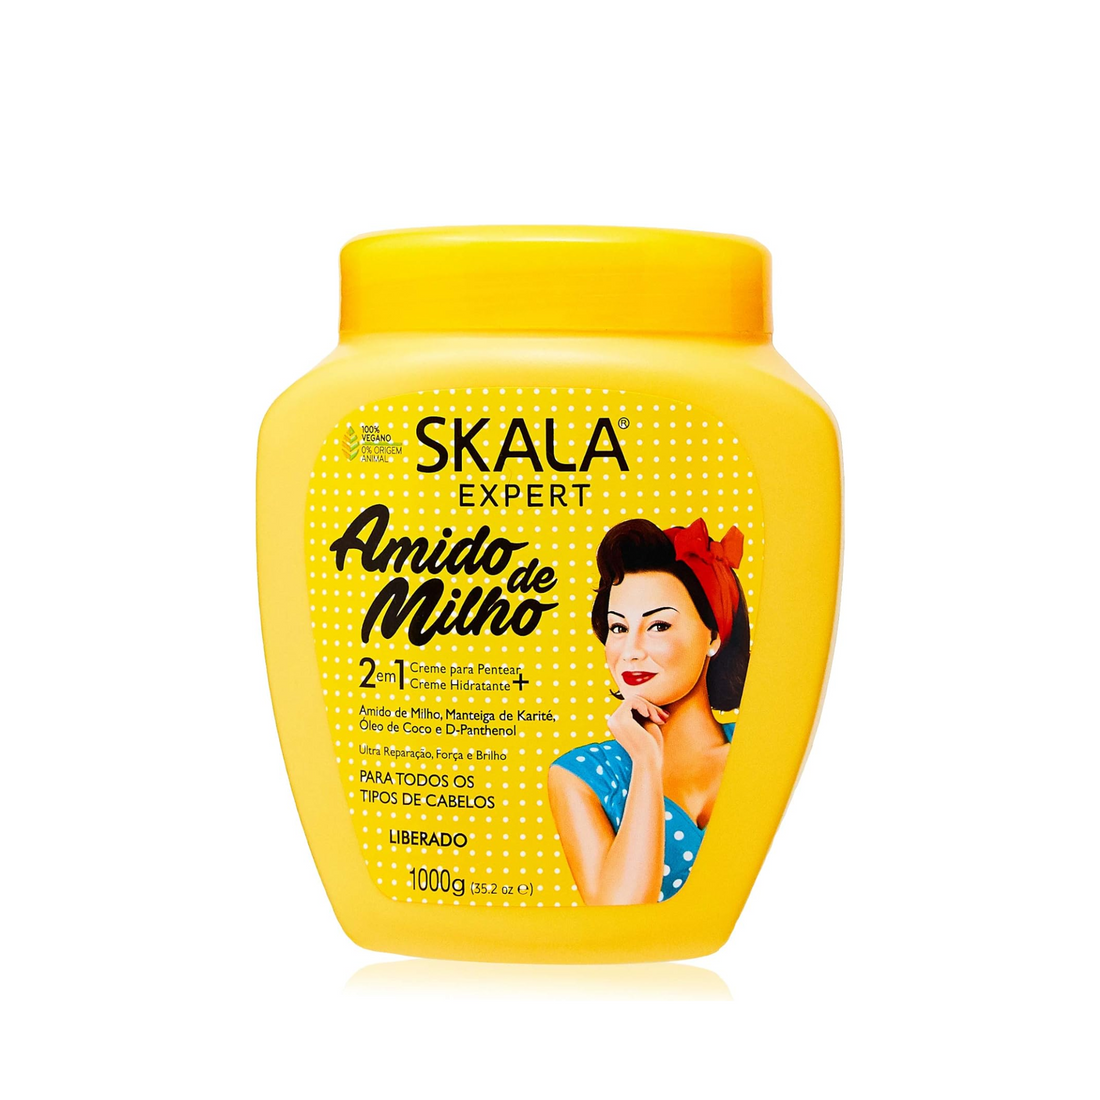 Skala Expert Scara Expert Corn Starch – All Hair Treatment Cream 1000g | 35.2 oz